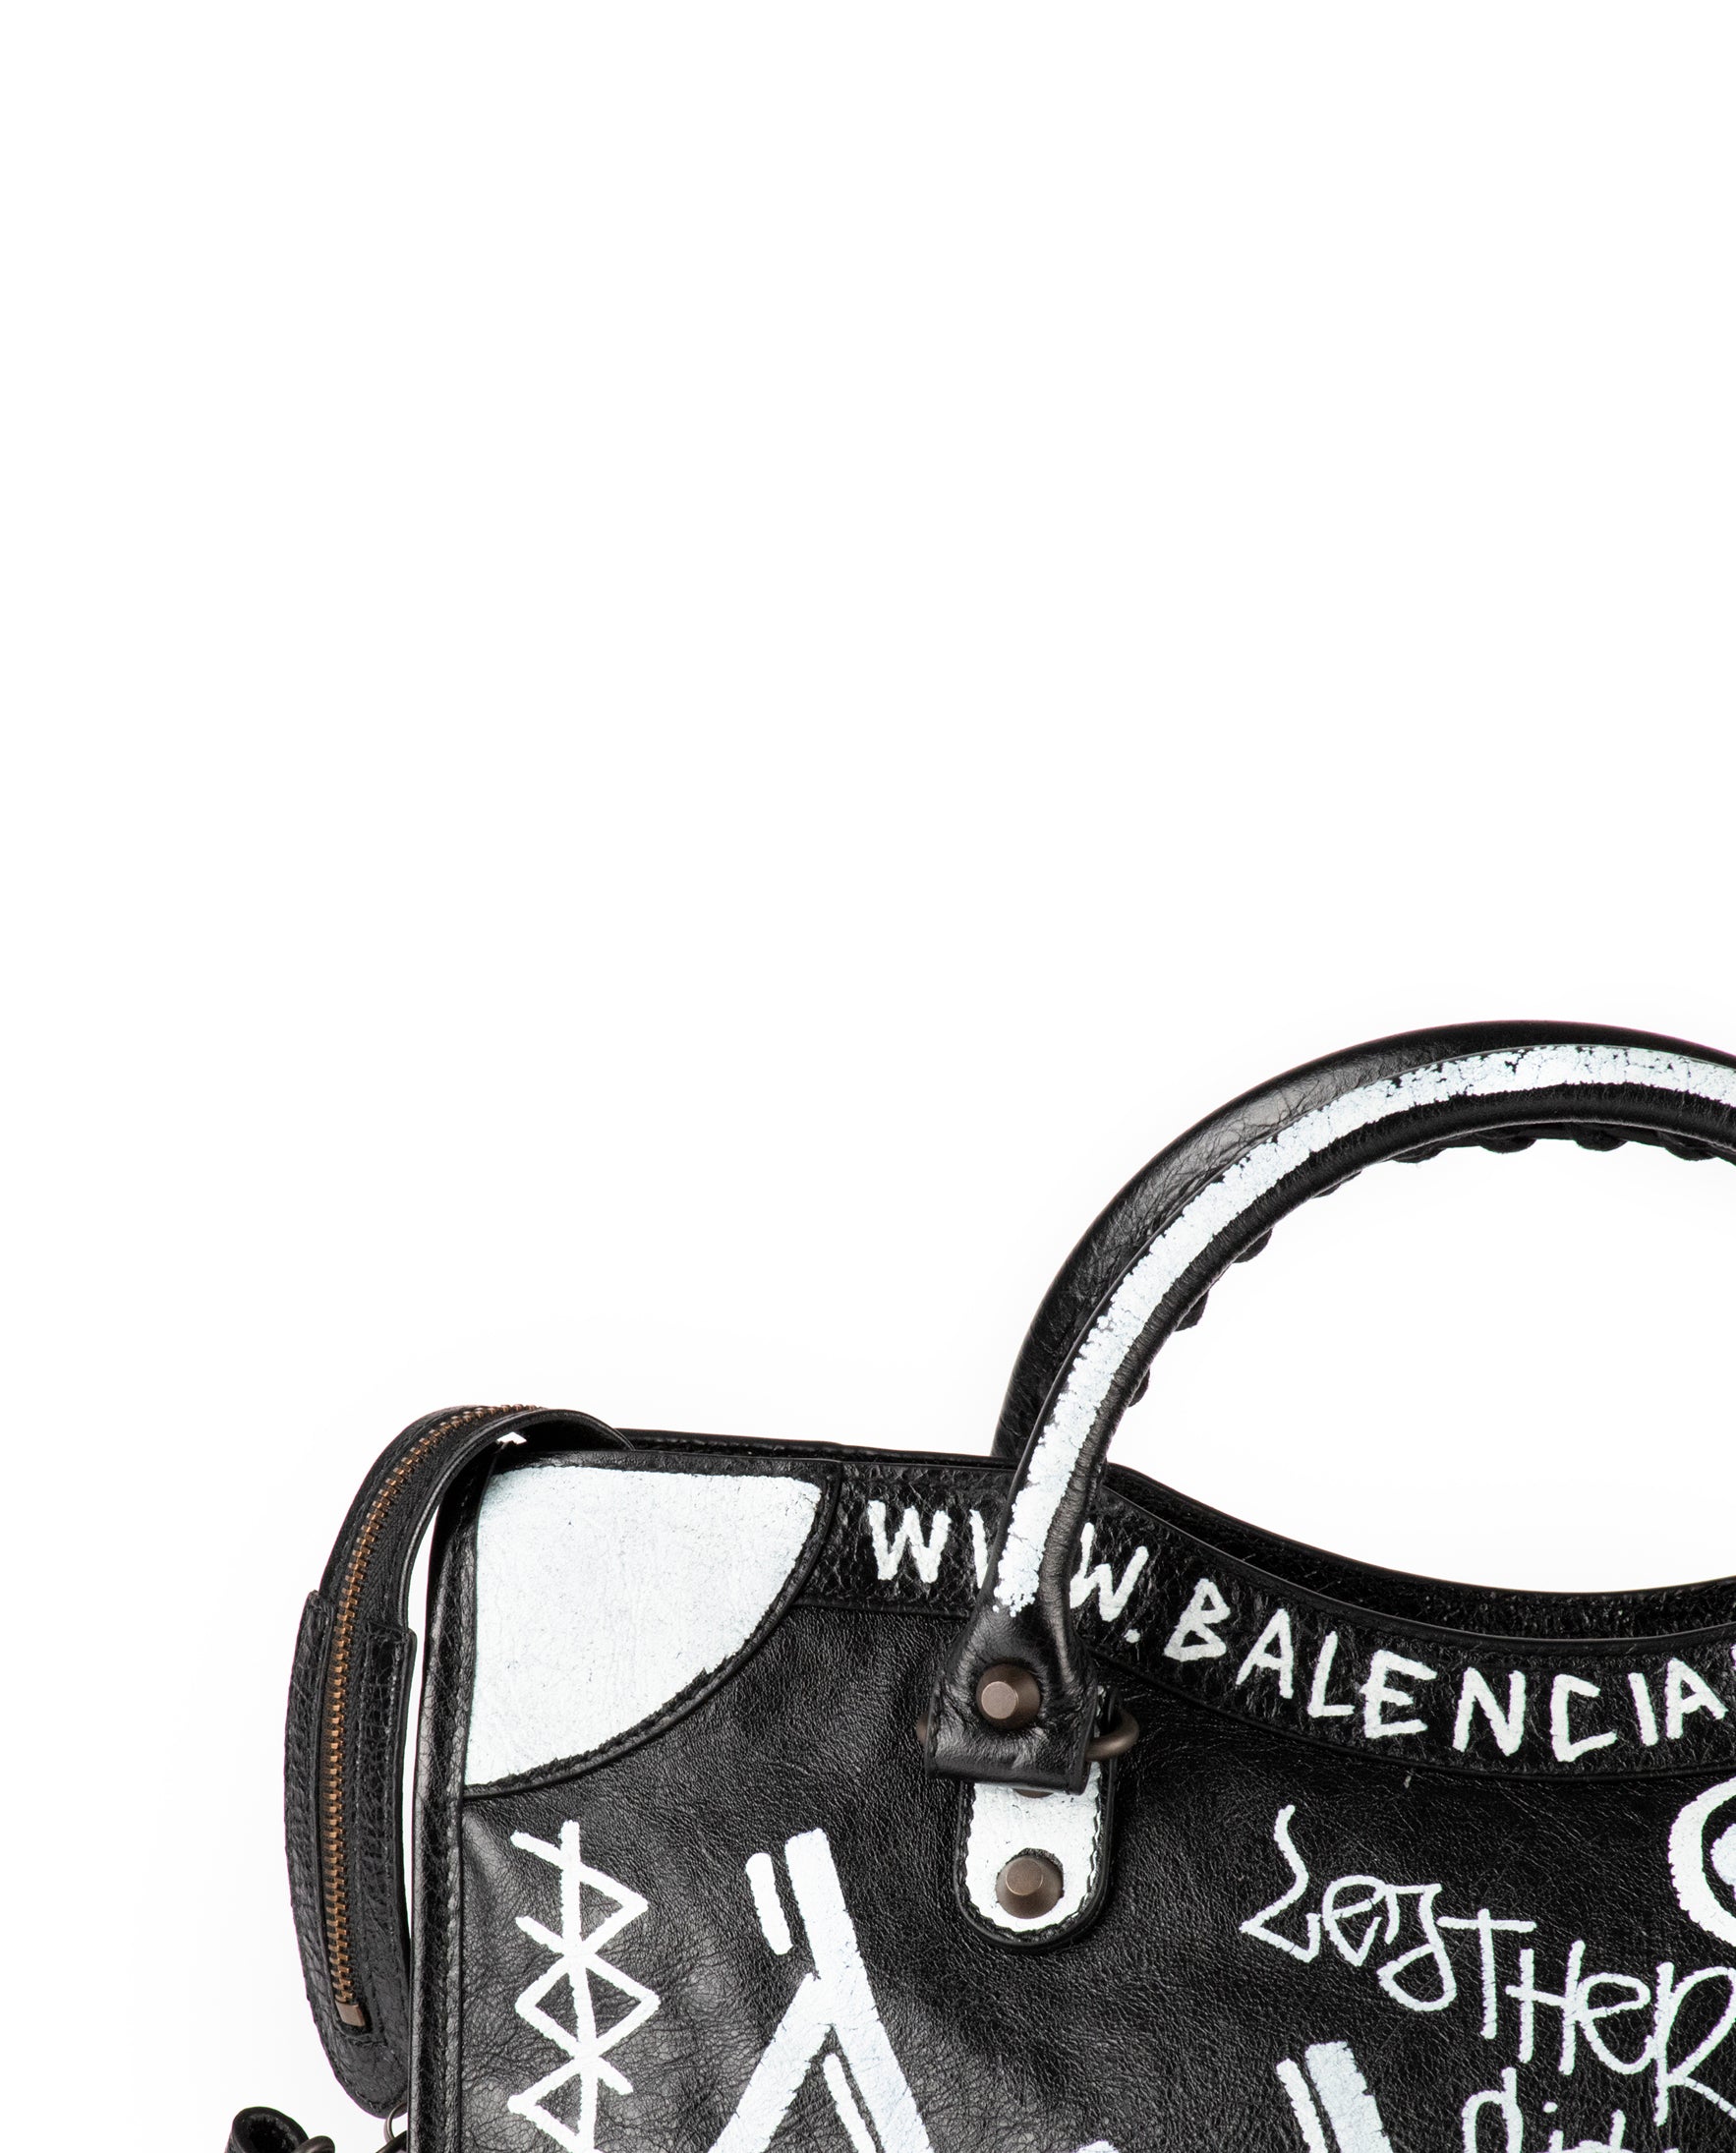 Balenciaga Black & White Graffiti Leather Classic City Bag by WP